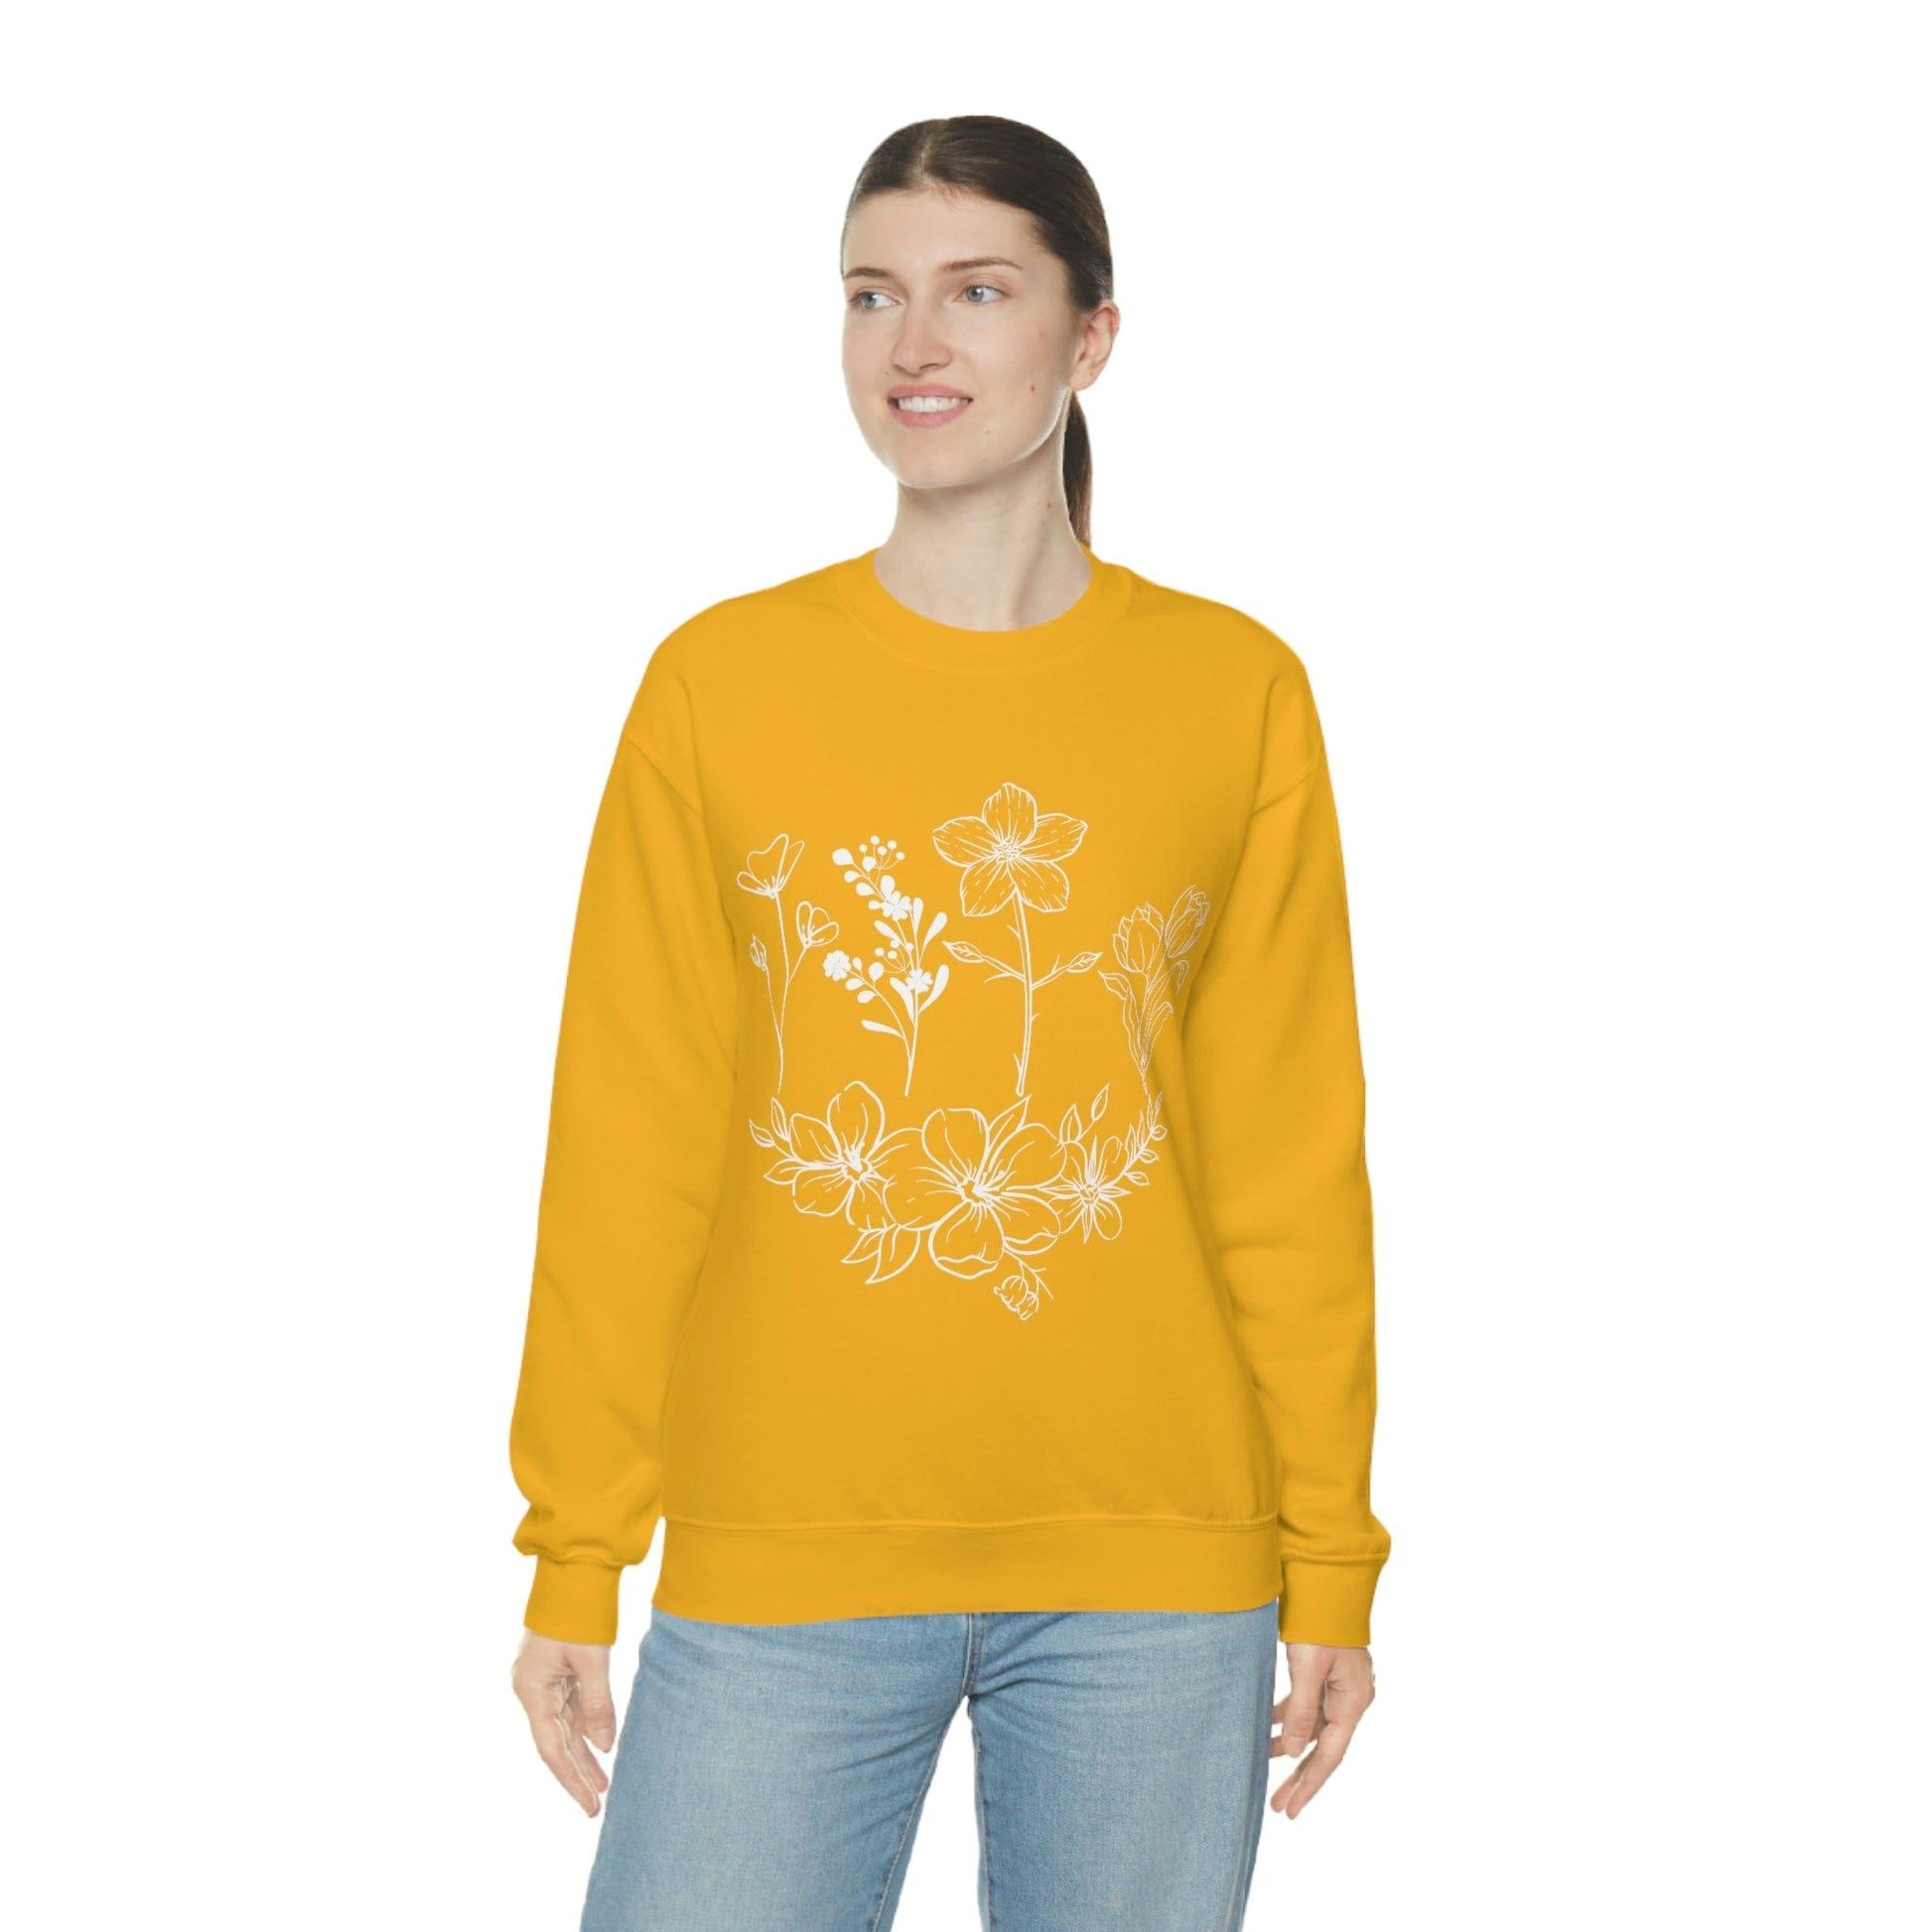 Flower sweatshirt, Vintage Flower Shirt, Vintage Botanical Shirt, plant sweatshirt, - Giftsmojo